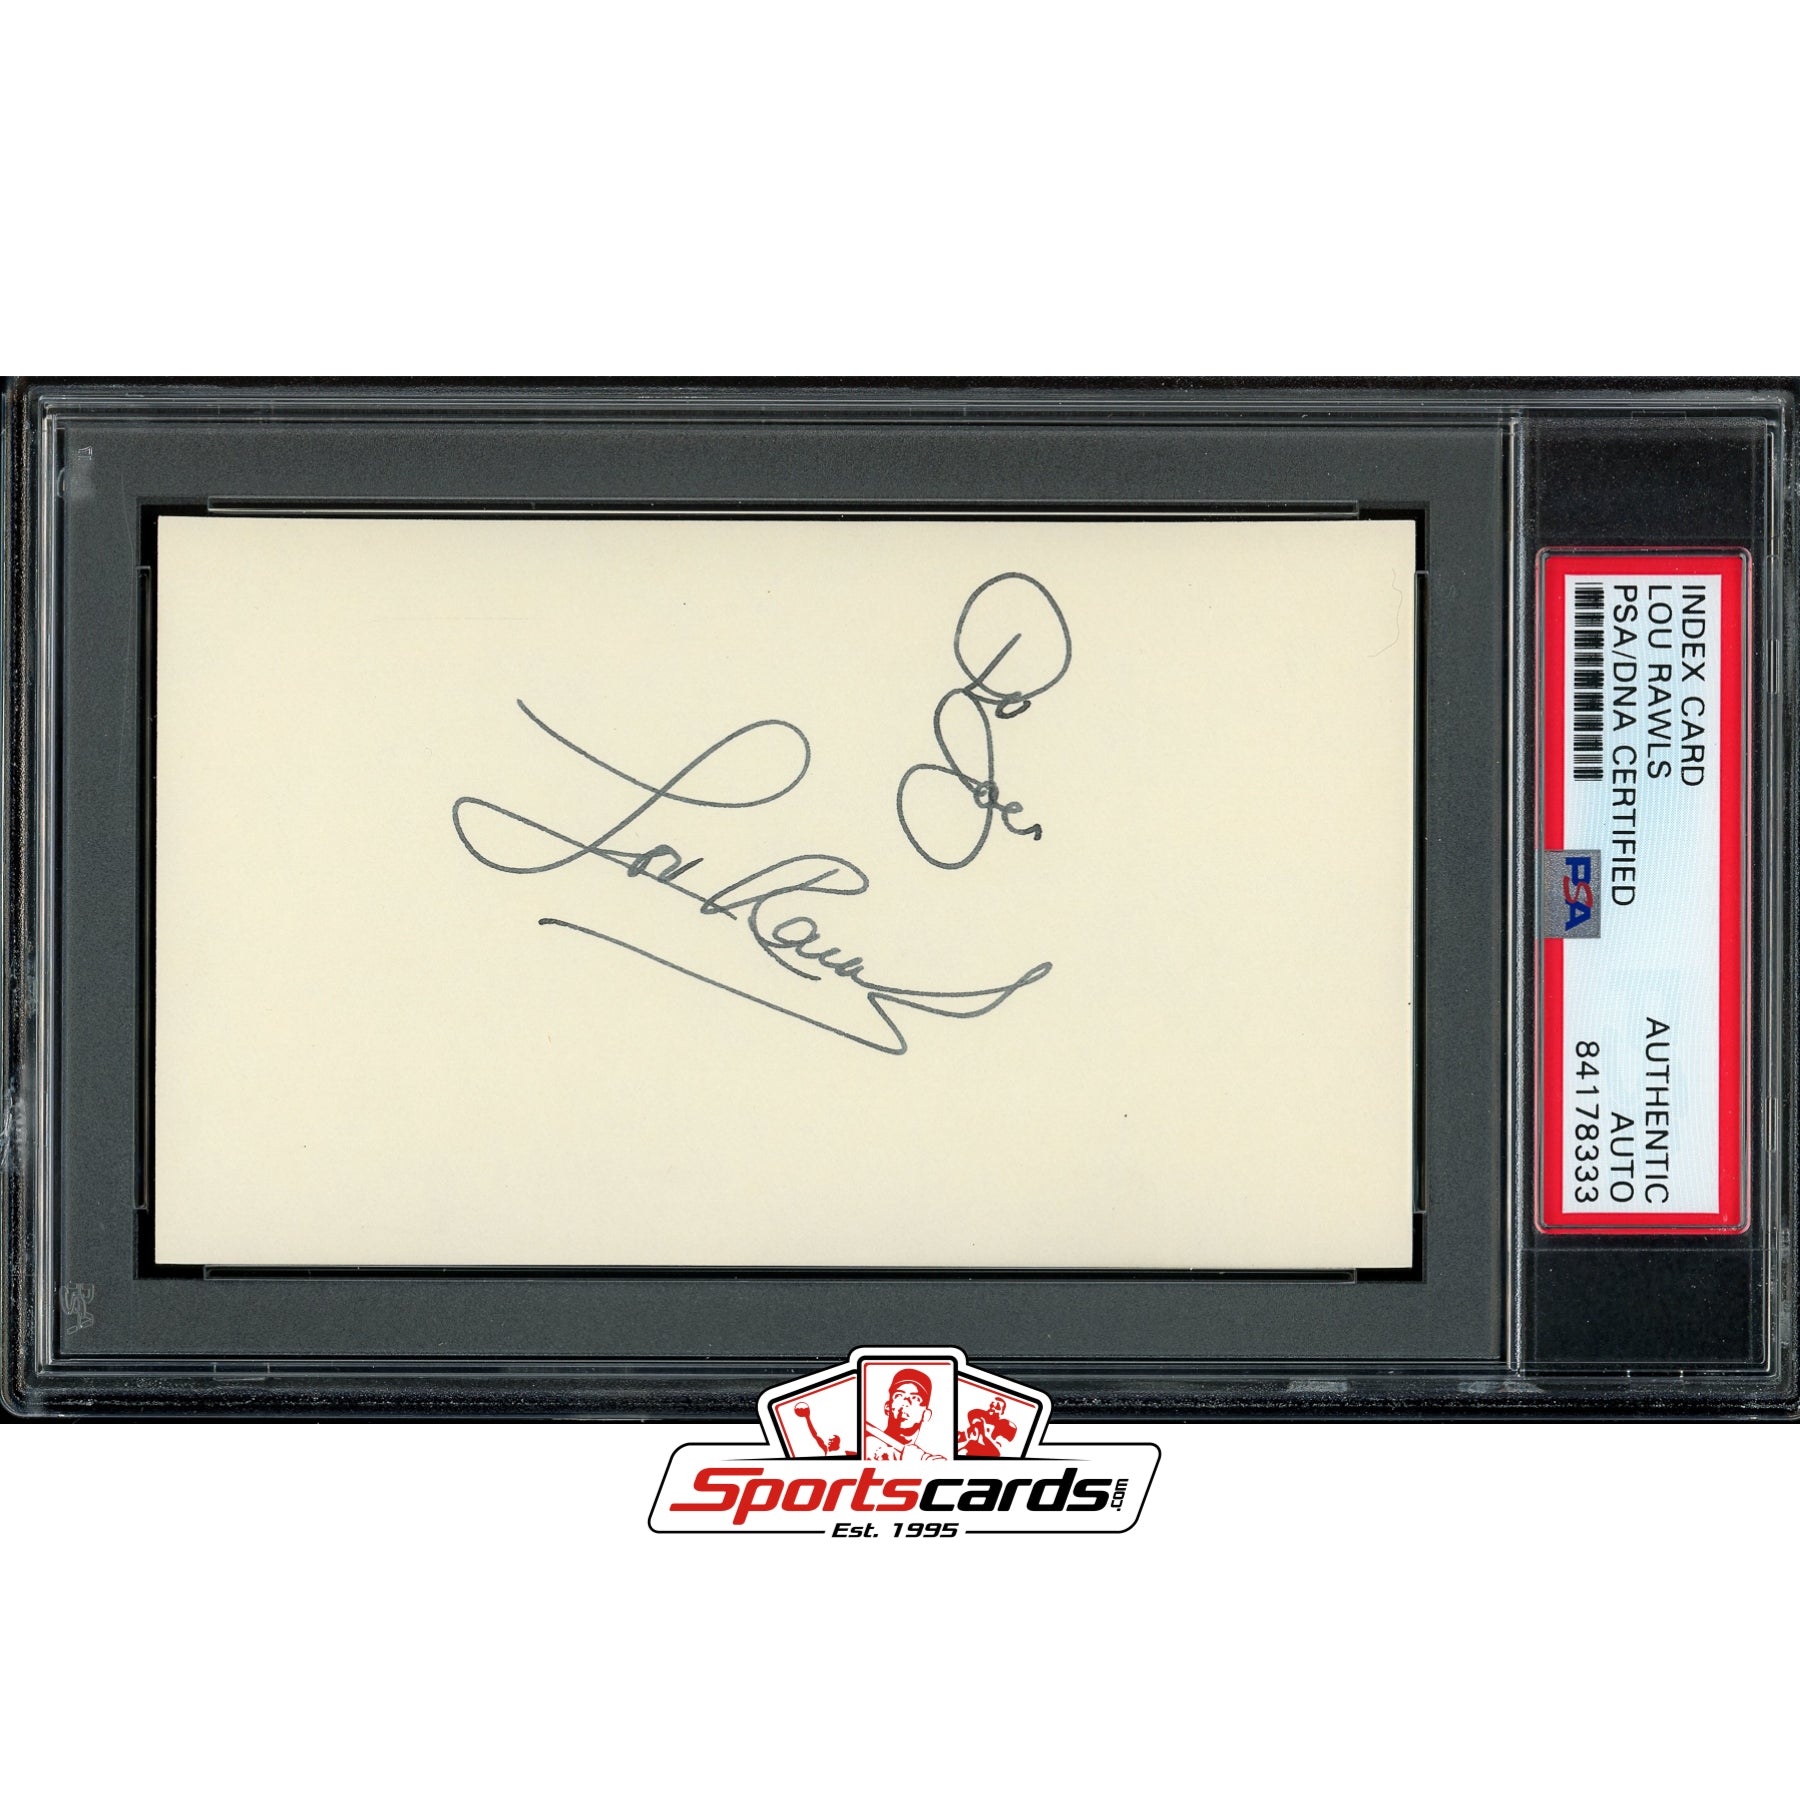 Lou Rawls (d.2006) Signed Auto 3x5 Index Card PSA/DNA Singer